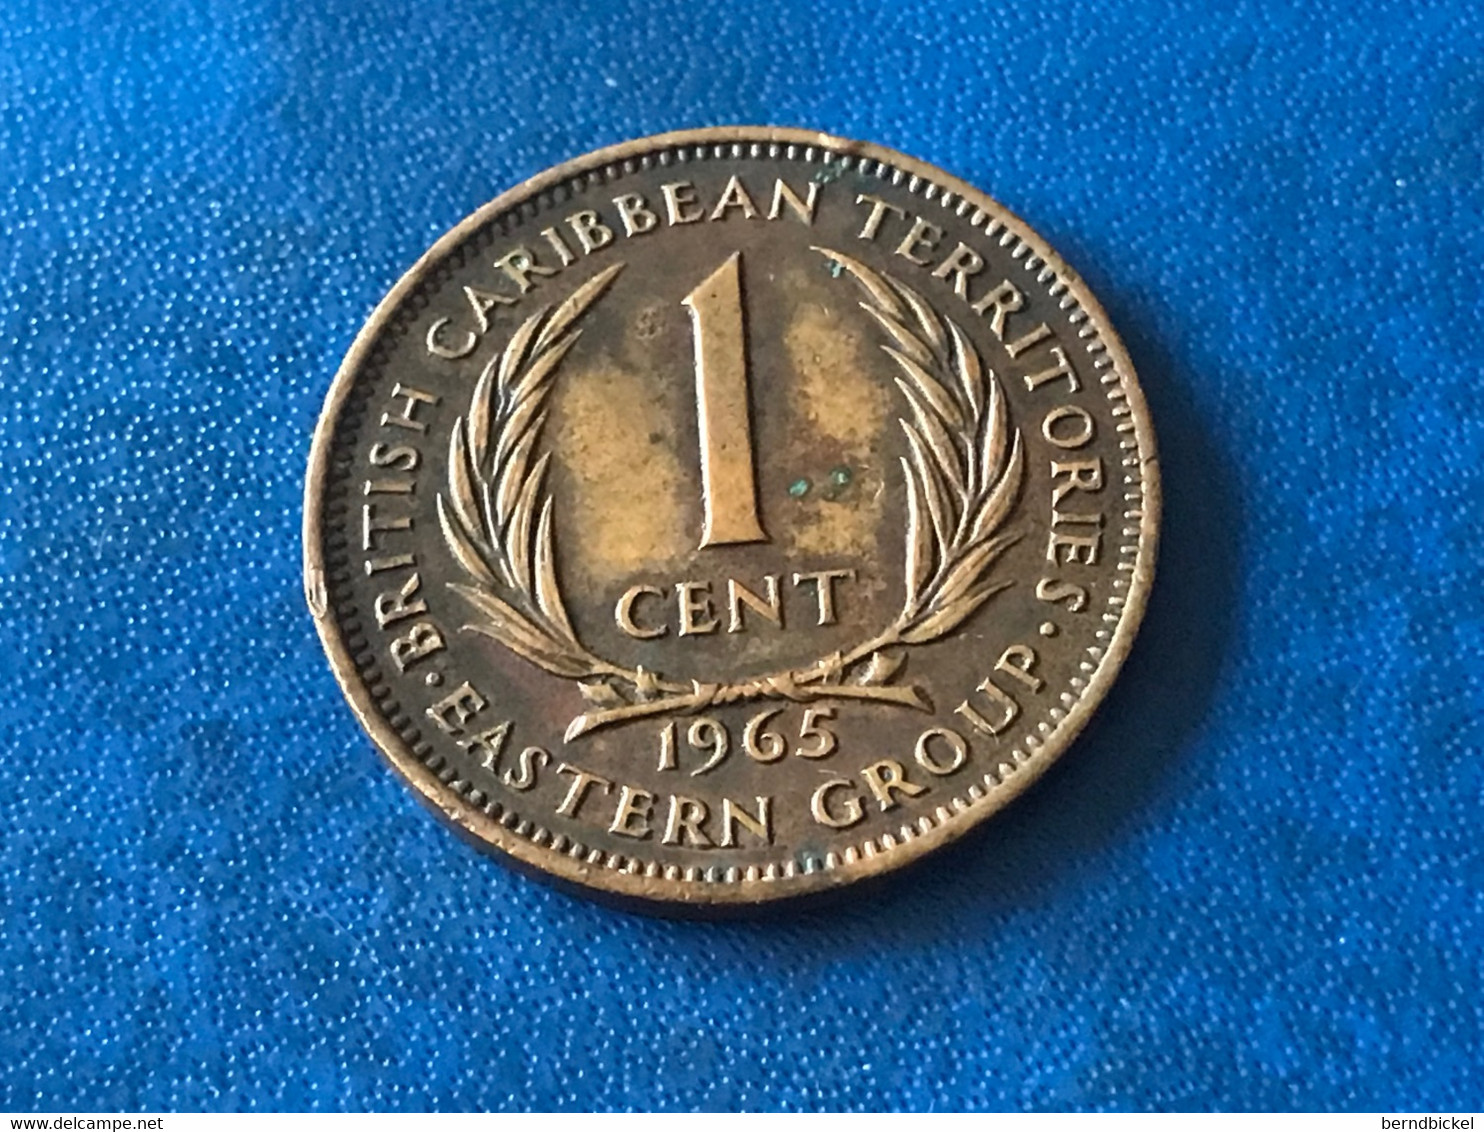 Münze Münzen Umlaufmünze Ostkaribische Staaten 1 Cent 1965 - East Caribbean Territories